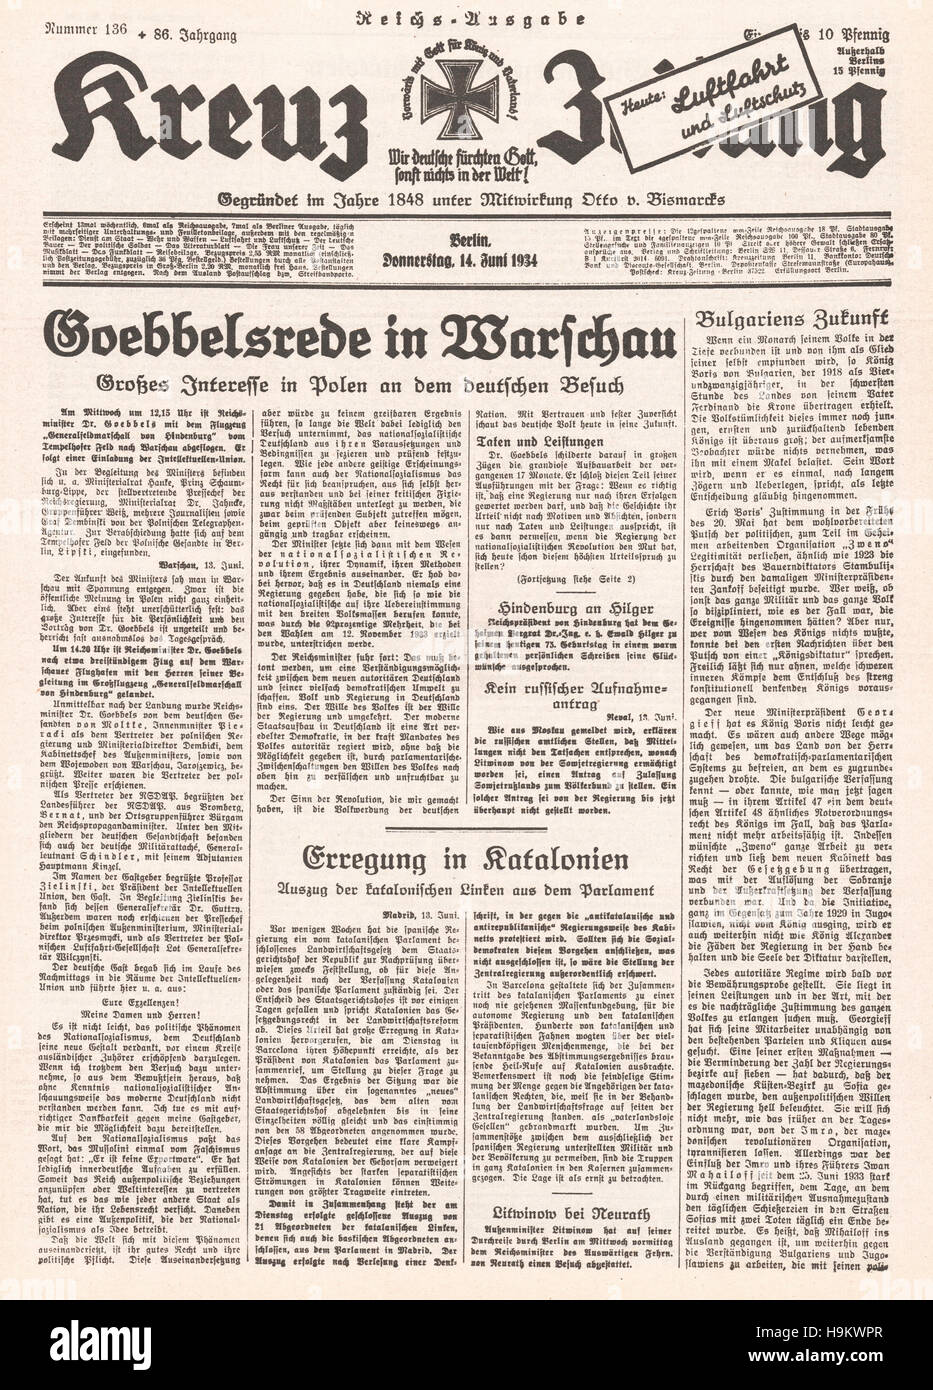 1934 Kreuz Zeitung front page (Germany) Geobbels speech in Warsaw Stock Photo